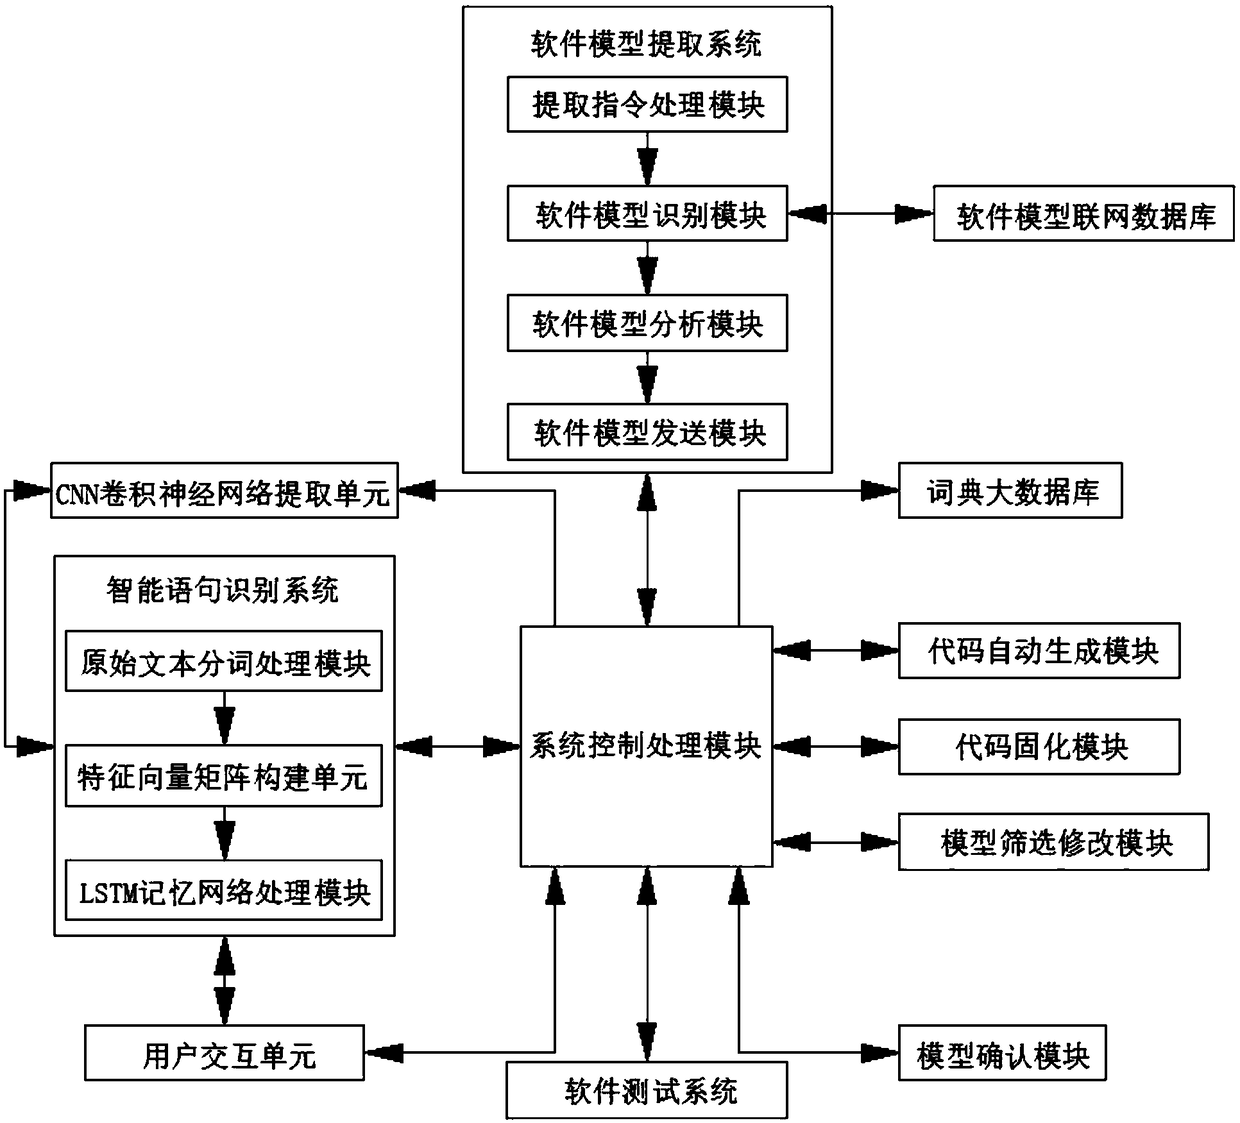 A model-based computer software development method